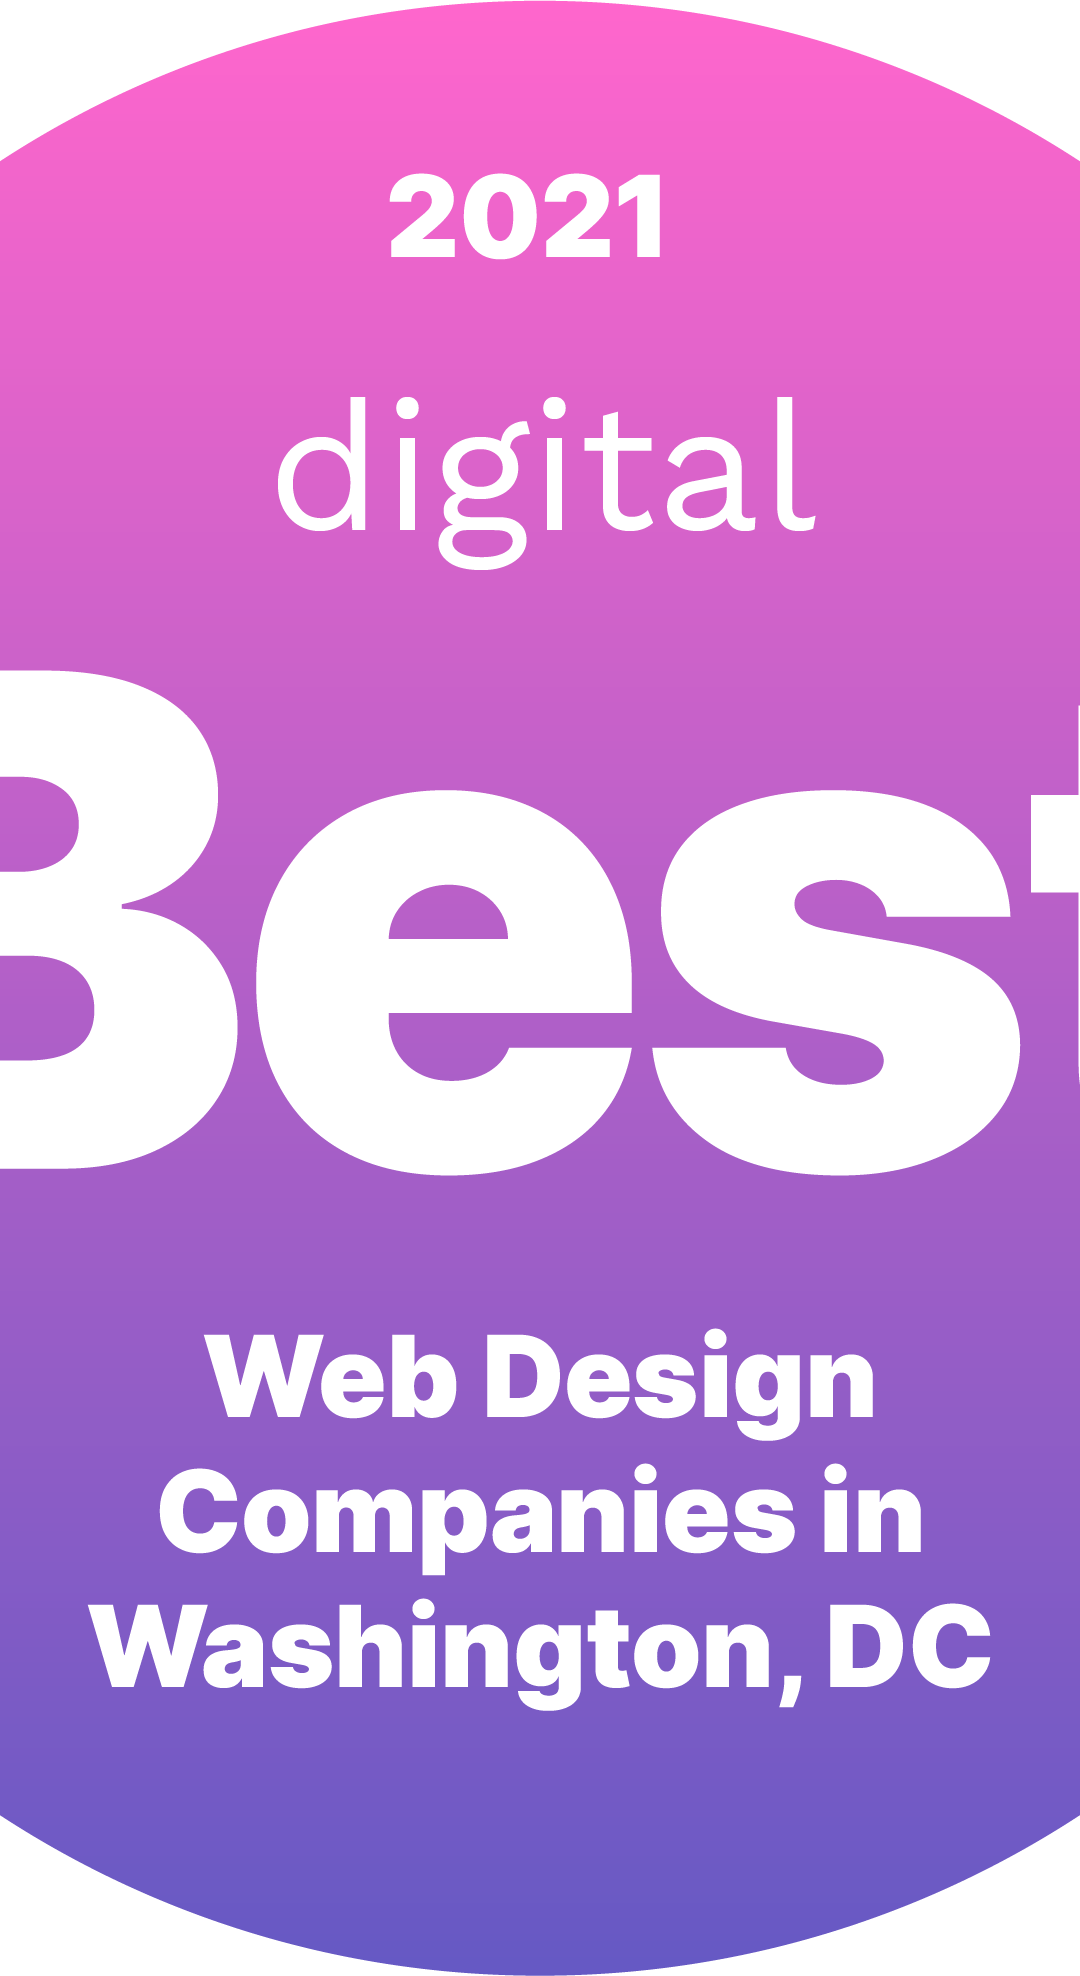 Ask the Egghead, Inc. Named Best Web Design Firm in Washington DC by Digital.com